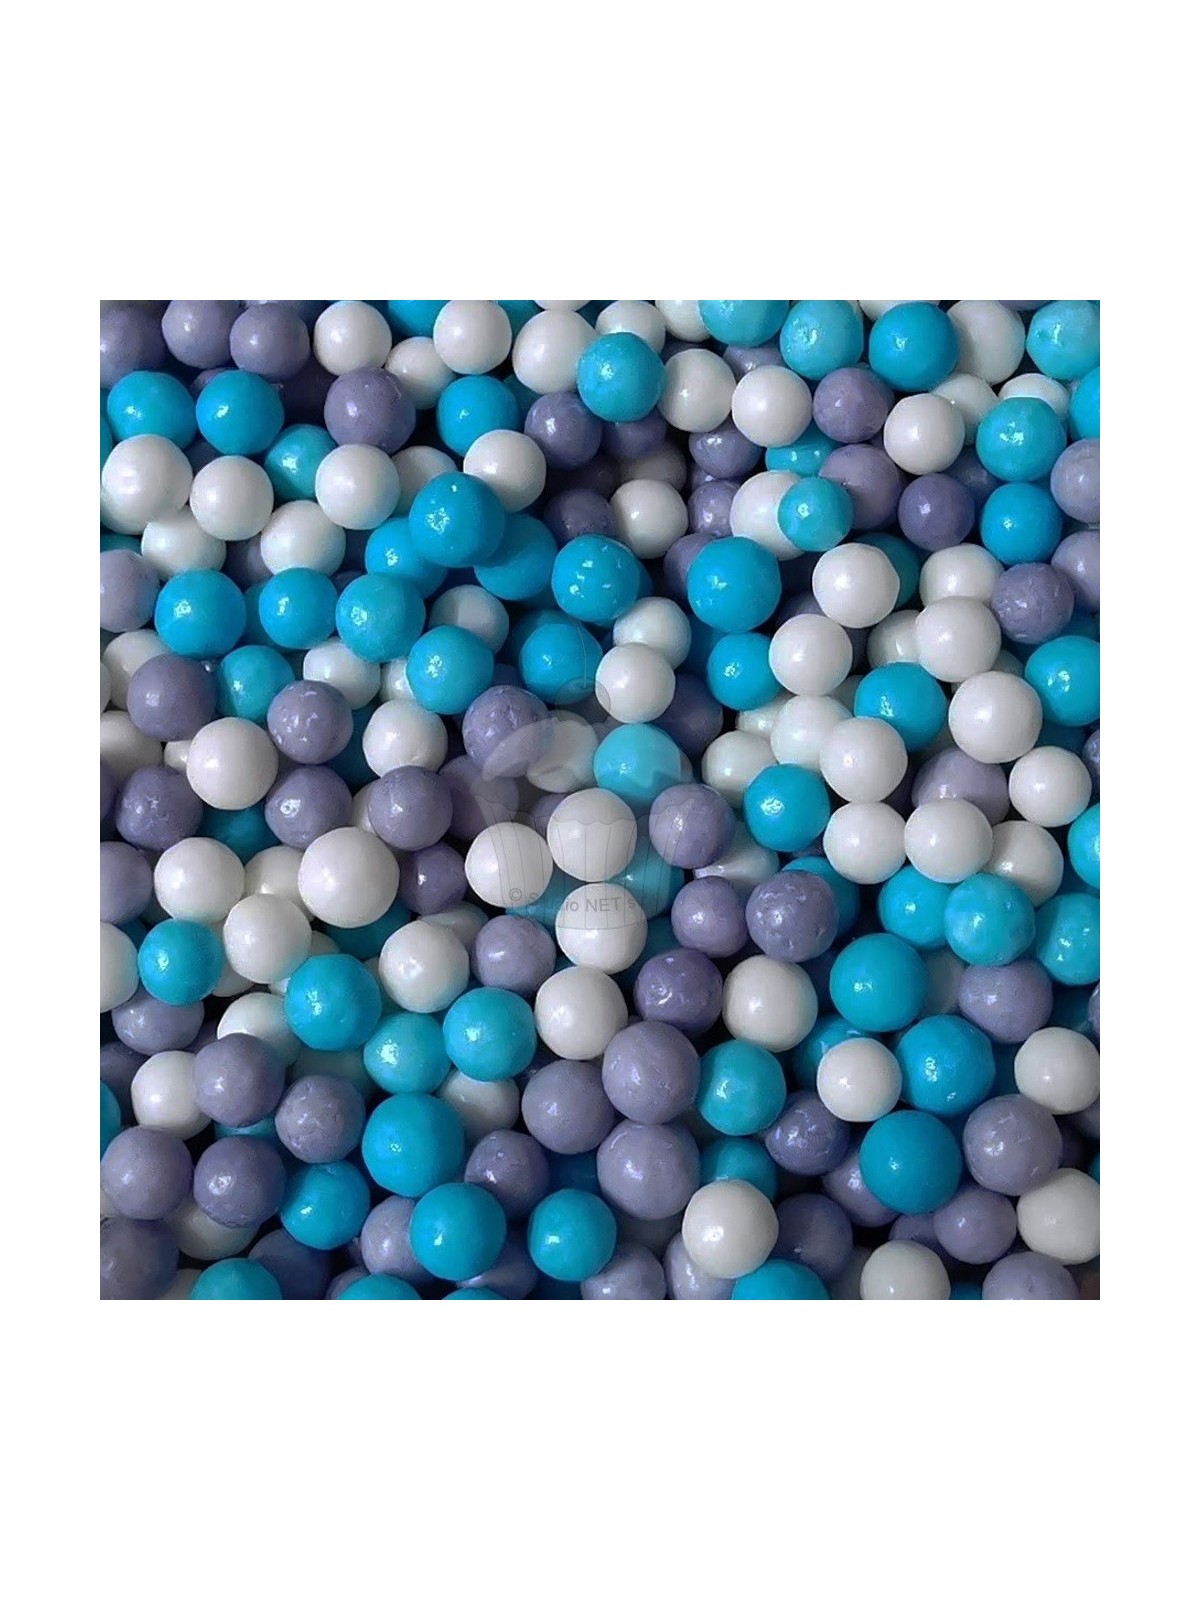 Zuckerperlen - Elsa - blau/weiß/lila - 100g